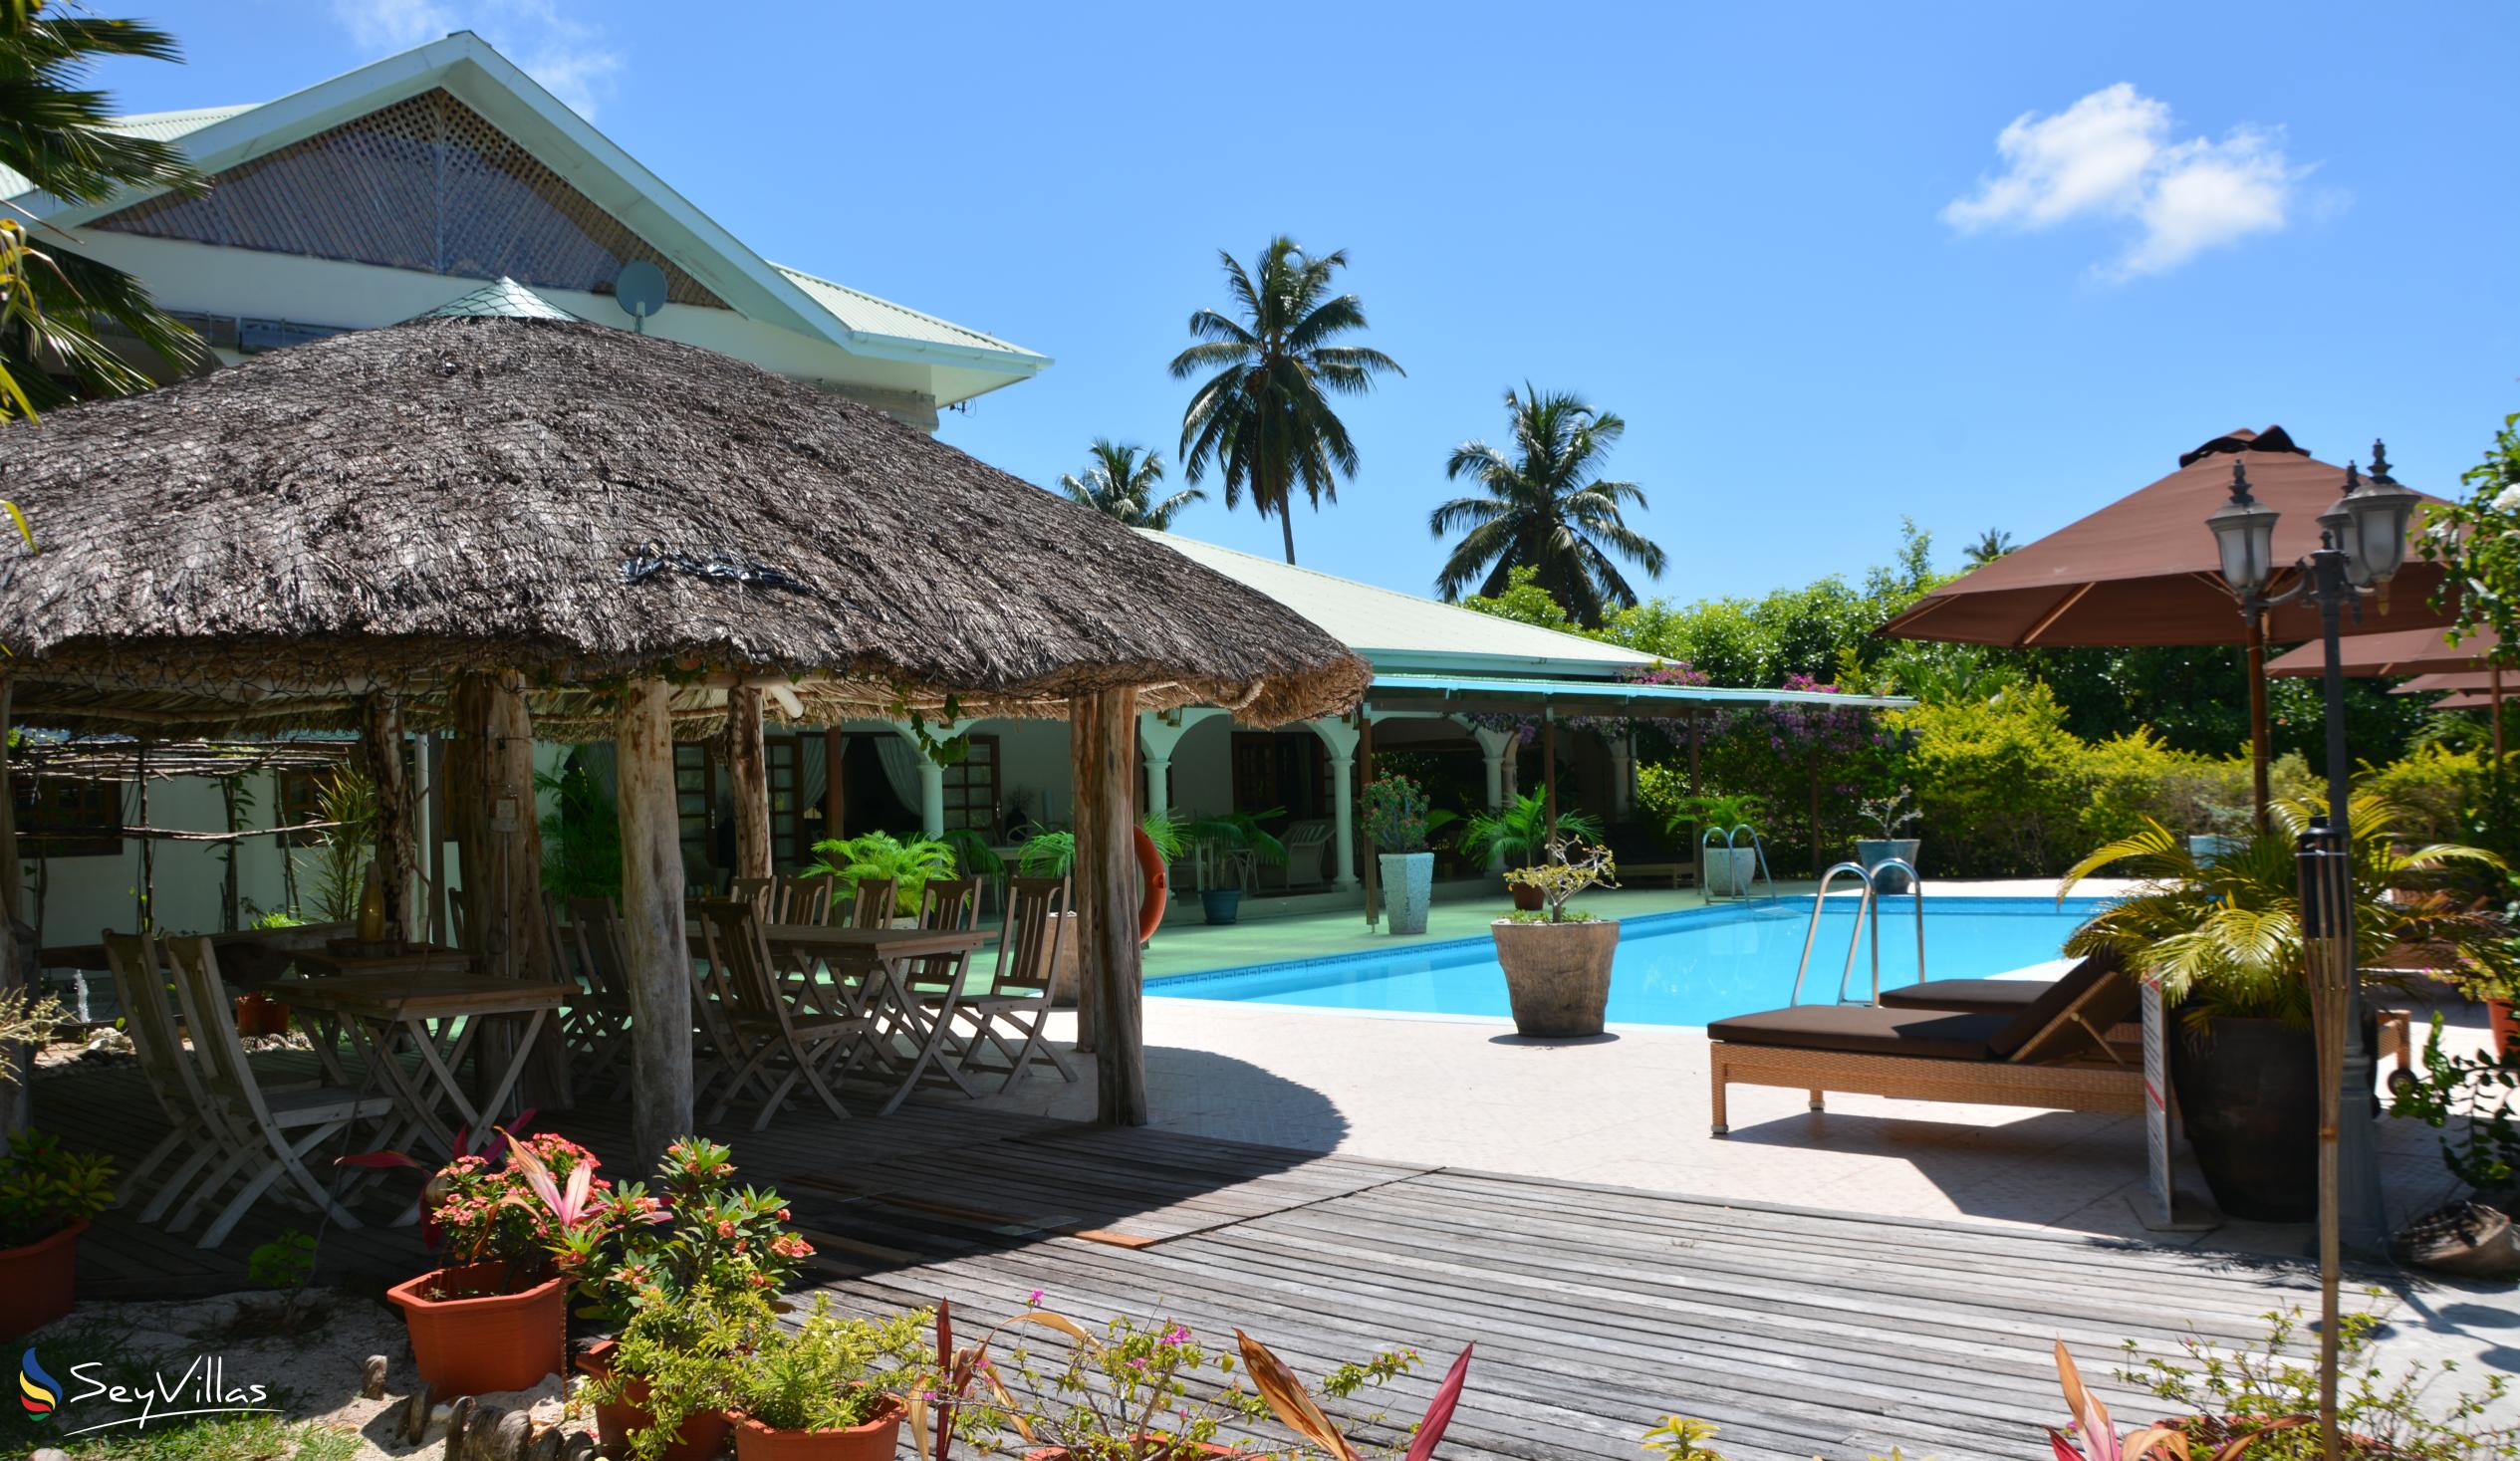 Photo 7: Villa de Cerf - Outdoor area - Cerf Island (Seychelles)